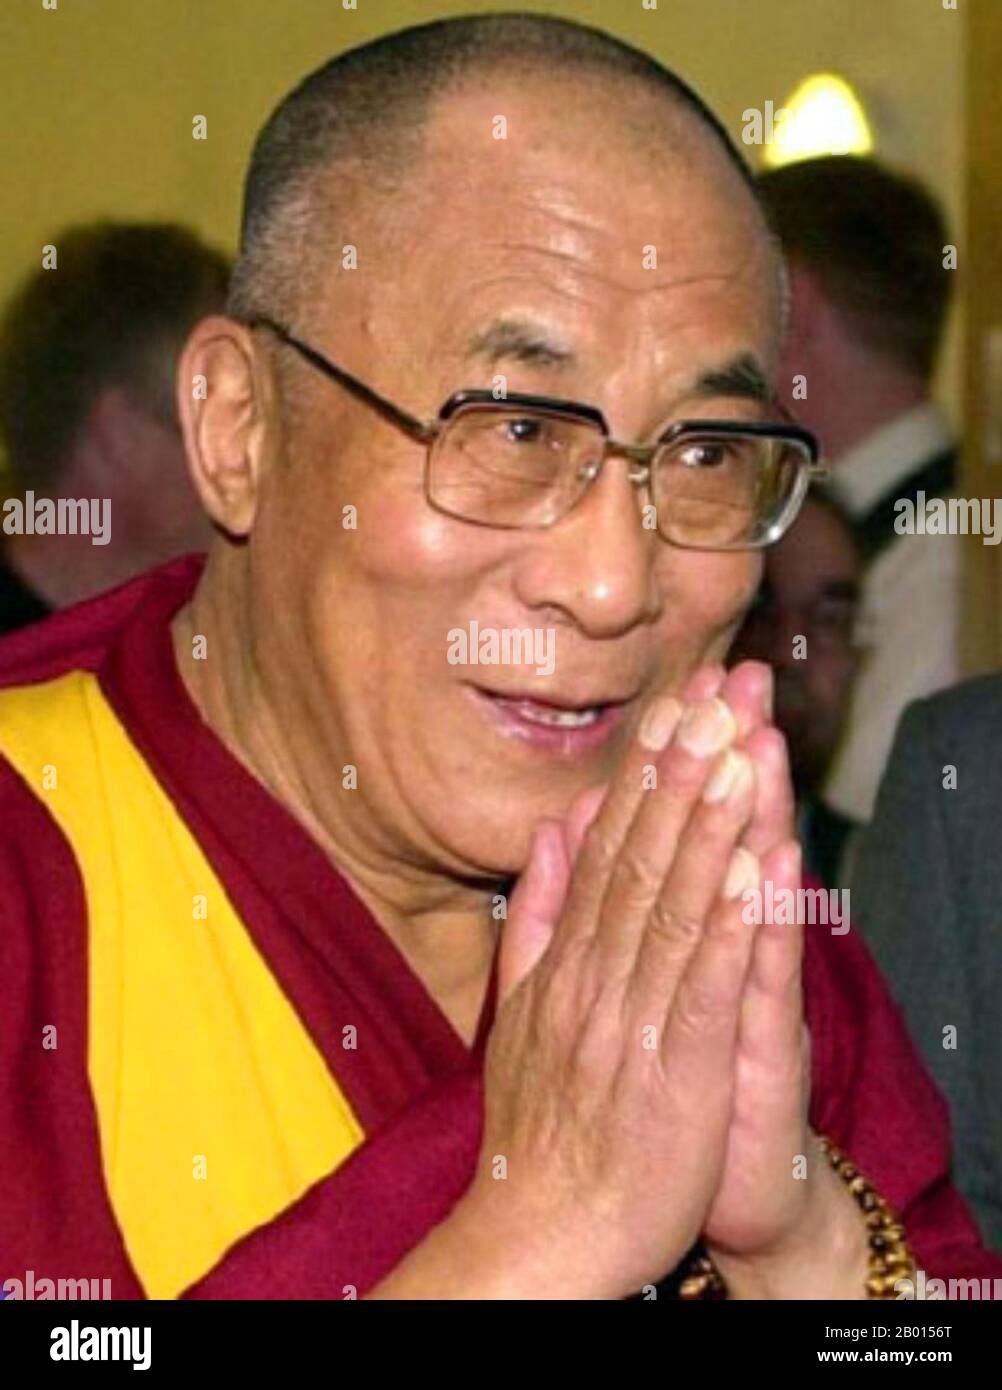 Cina/Tibet/India: Il XIV Dalai lama, Tenzin Gyatso (6 luglio 1935), XXI  secolo. Il XIV Dalai lama (nome religioso: Tenzin Gyatso, abbreviato da  Jetsun Jamphel Ngawang Lobsang Yeshe Tenzin Gyatso, nato Lhamo Dondrub)